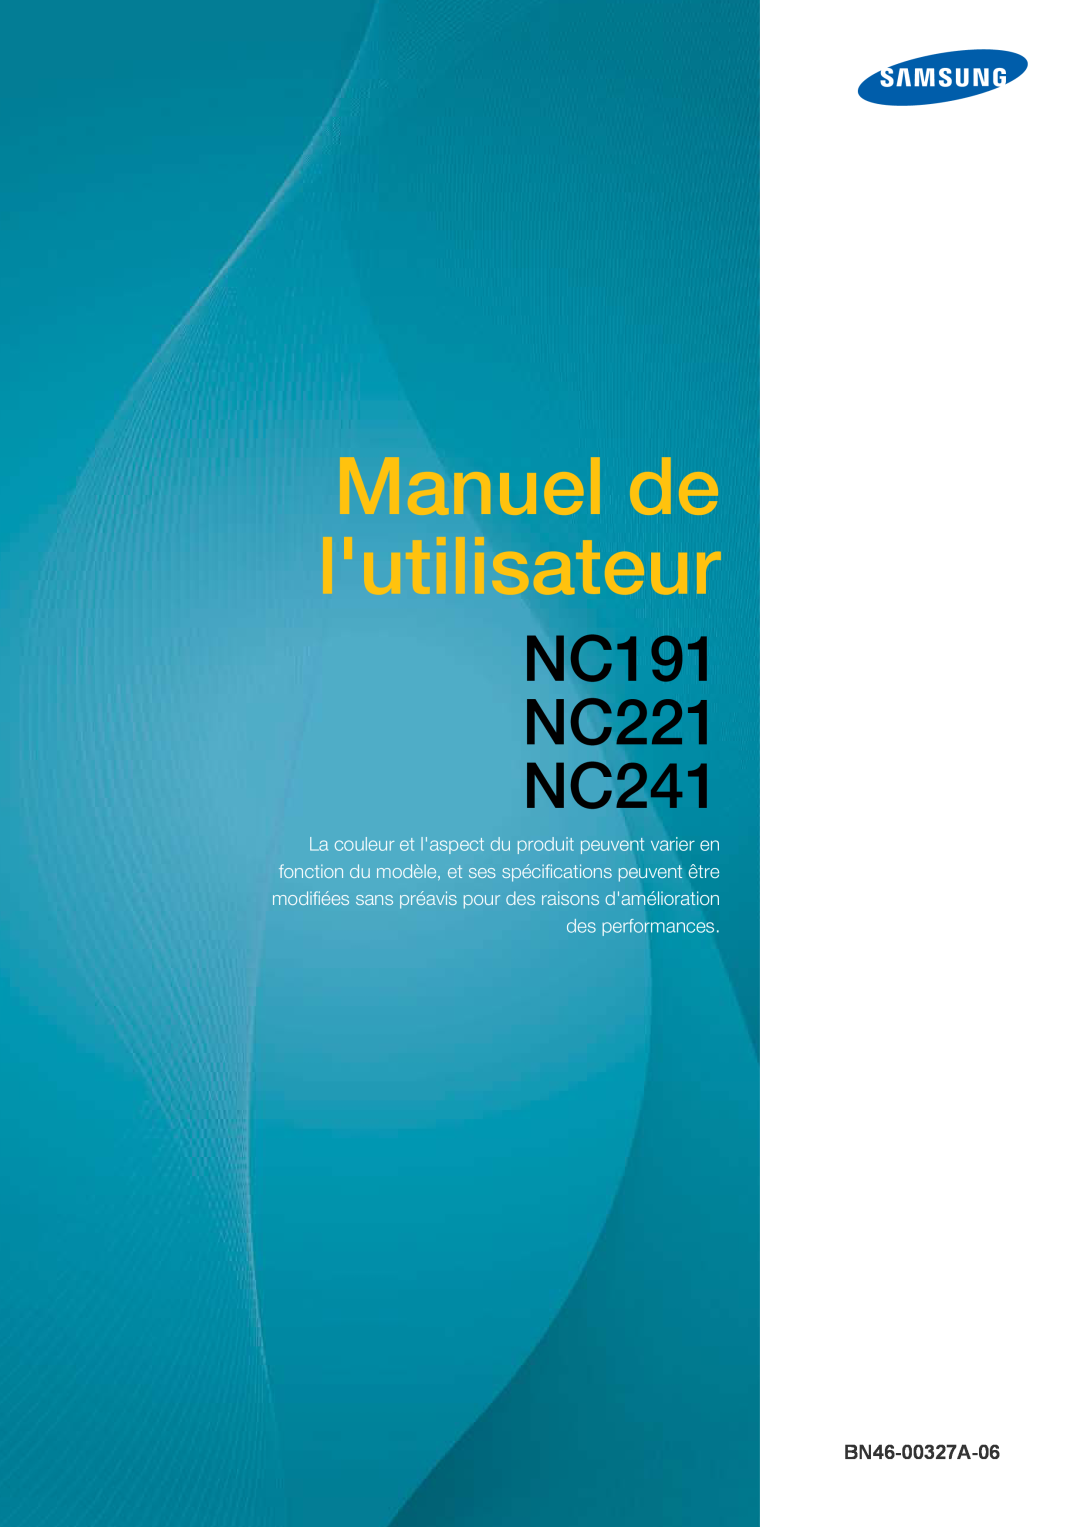 Samsung LF22FN1PFBZXEN, LF22NTBHBNM/EN manual Manuel de lutilisateur, NC191 NC221 NC241, BN46-00327A-06 